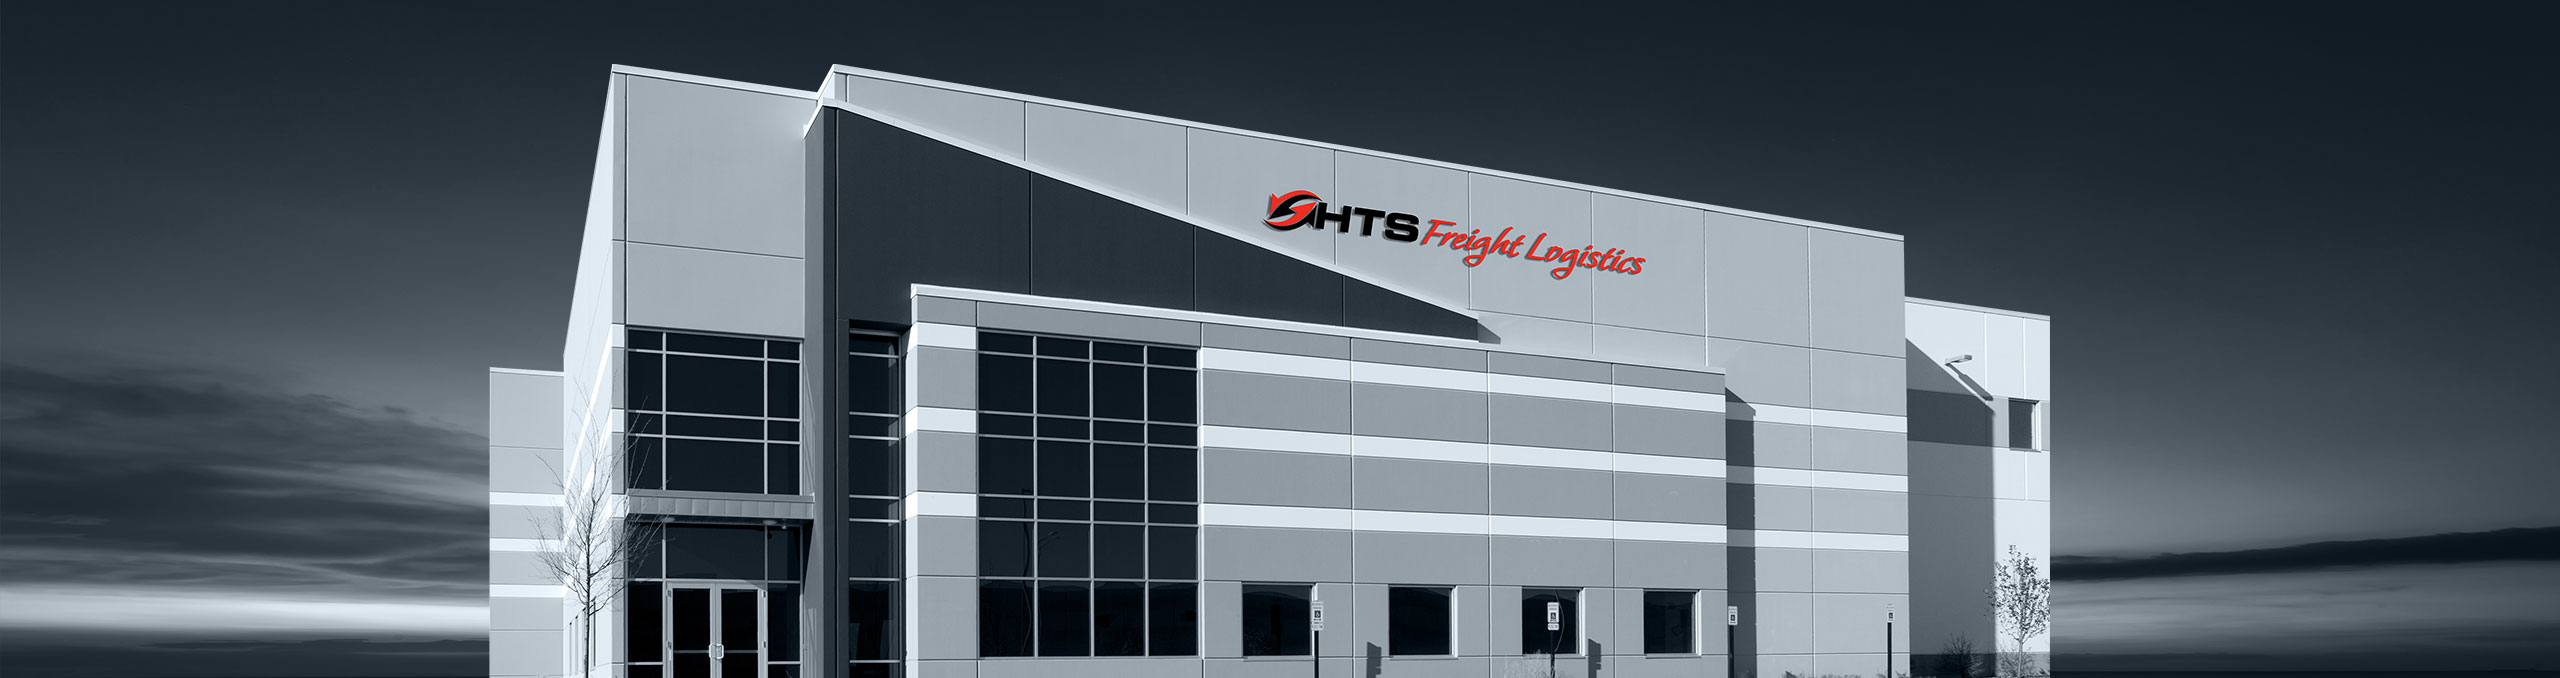 HTS Freight Logistics in Bolton (Toronto), Ontario, Canada.